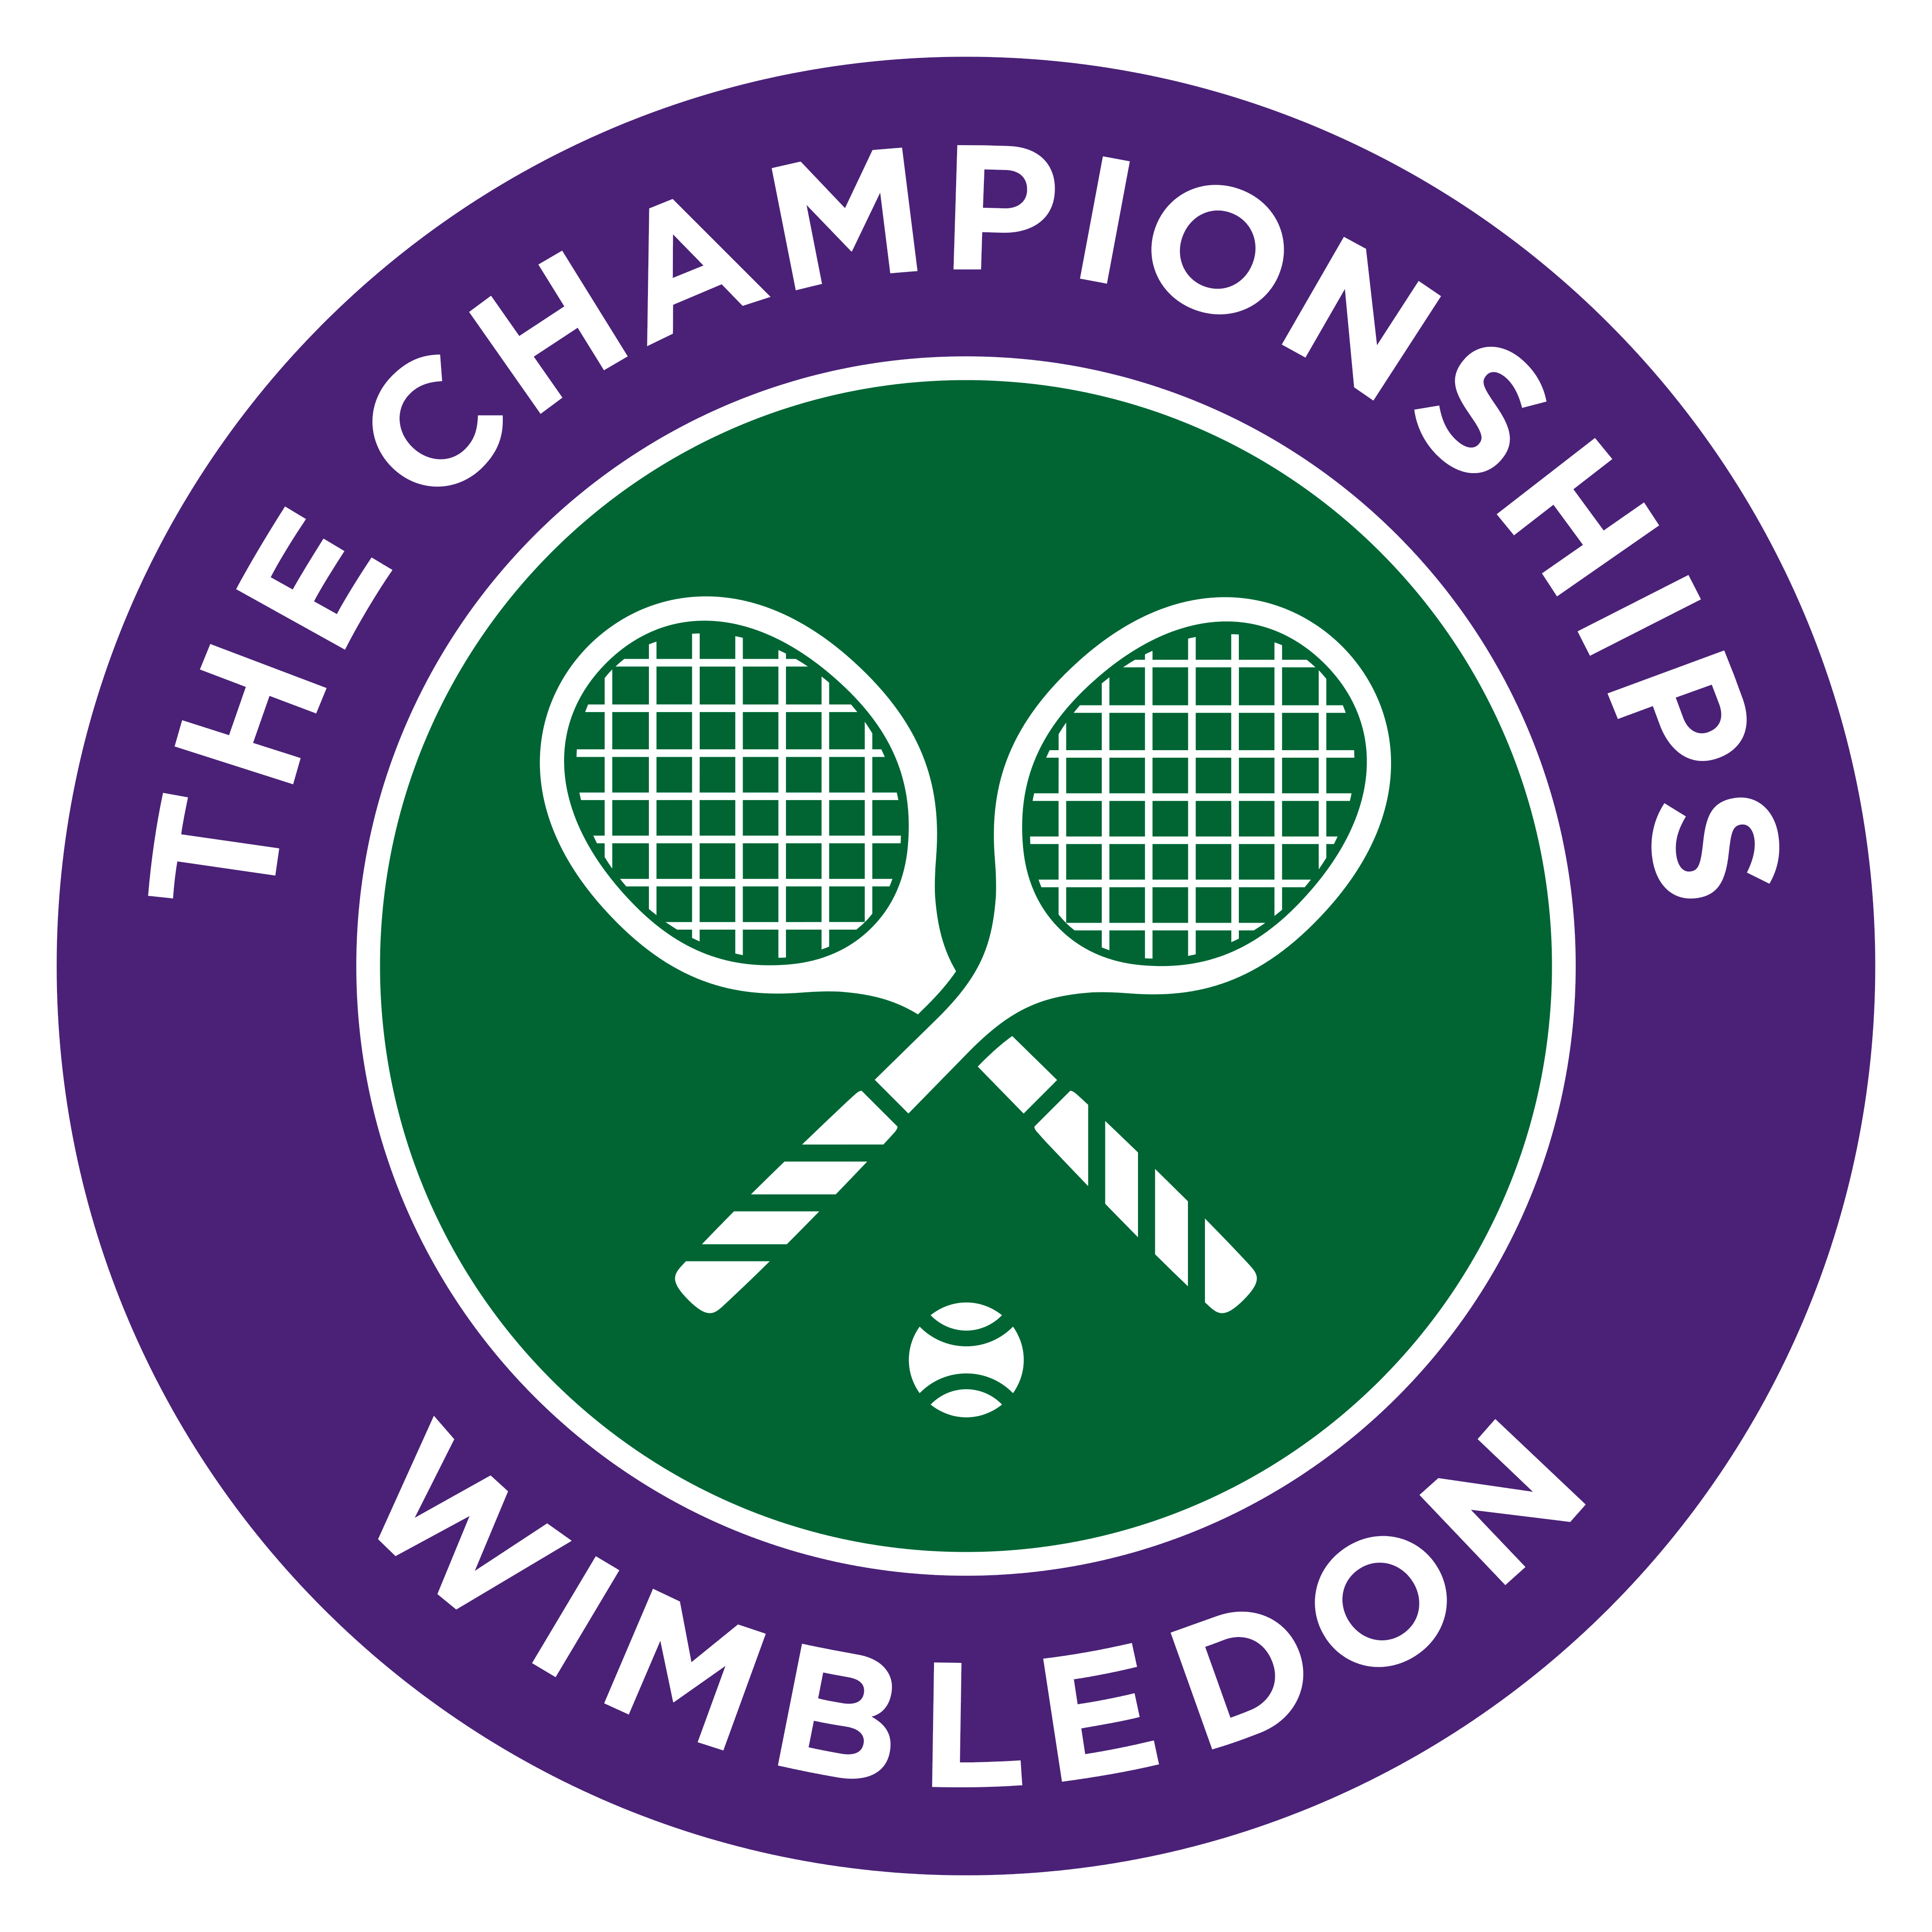 Wimbledon logo, logotype